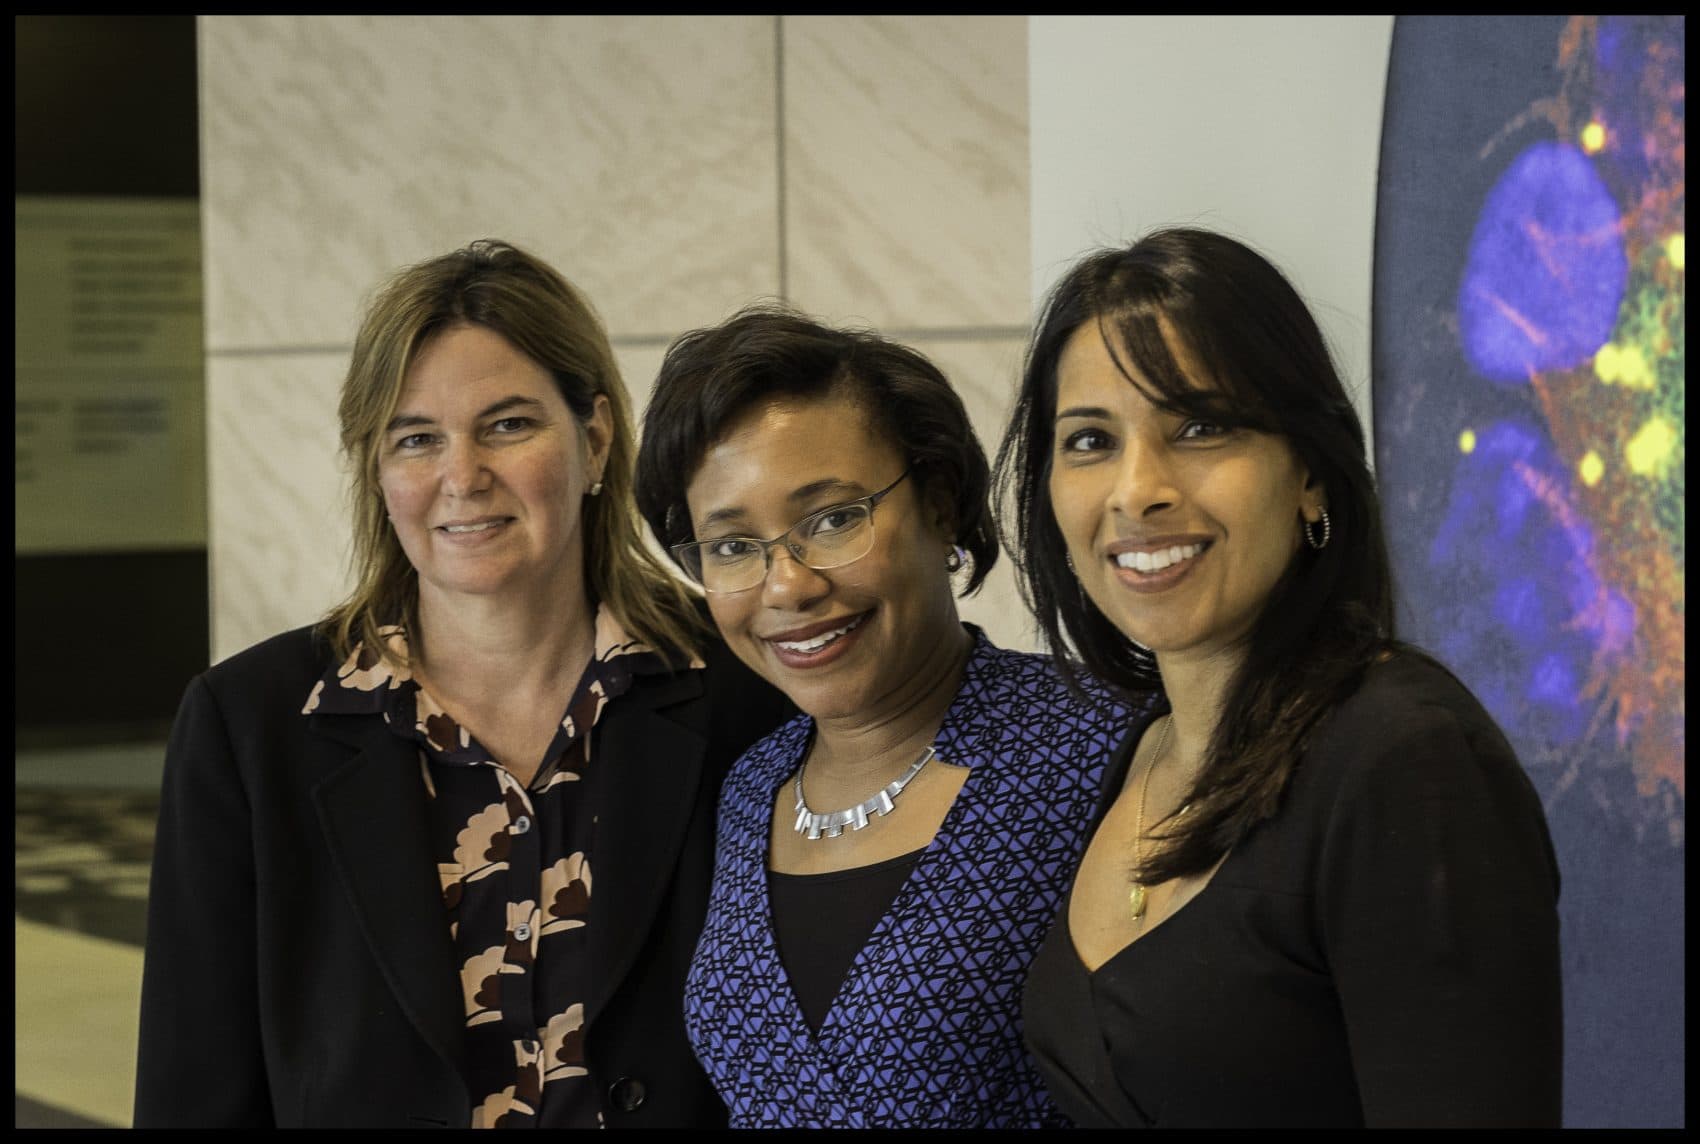 From left to right: Drs. Angela Belcher, Paula Hammond and Sangeeta Bhatia. (Courtesy)